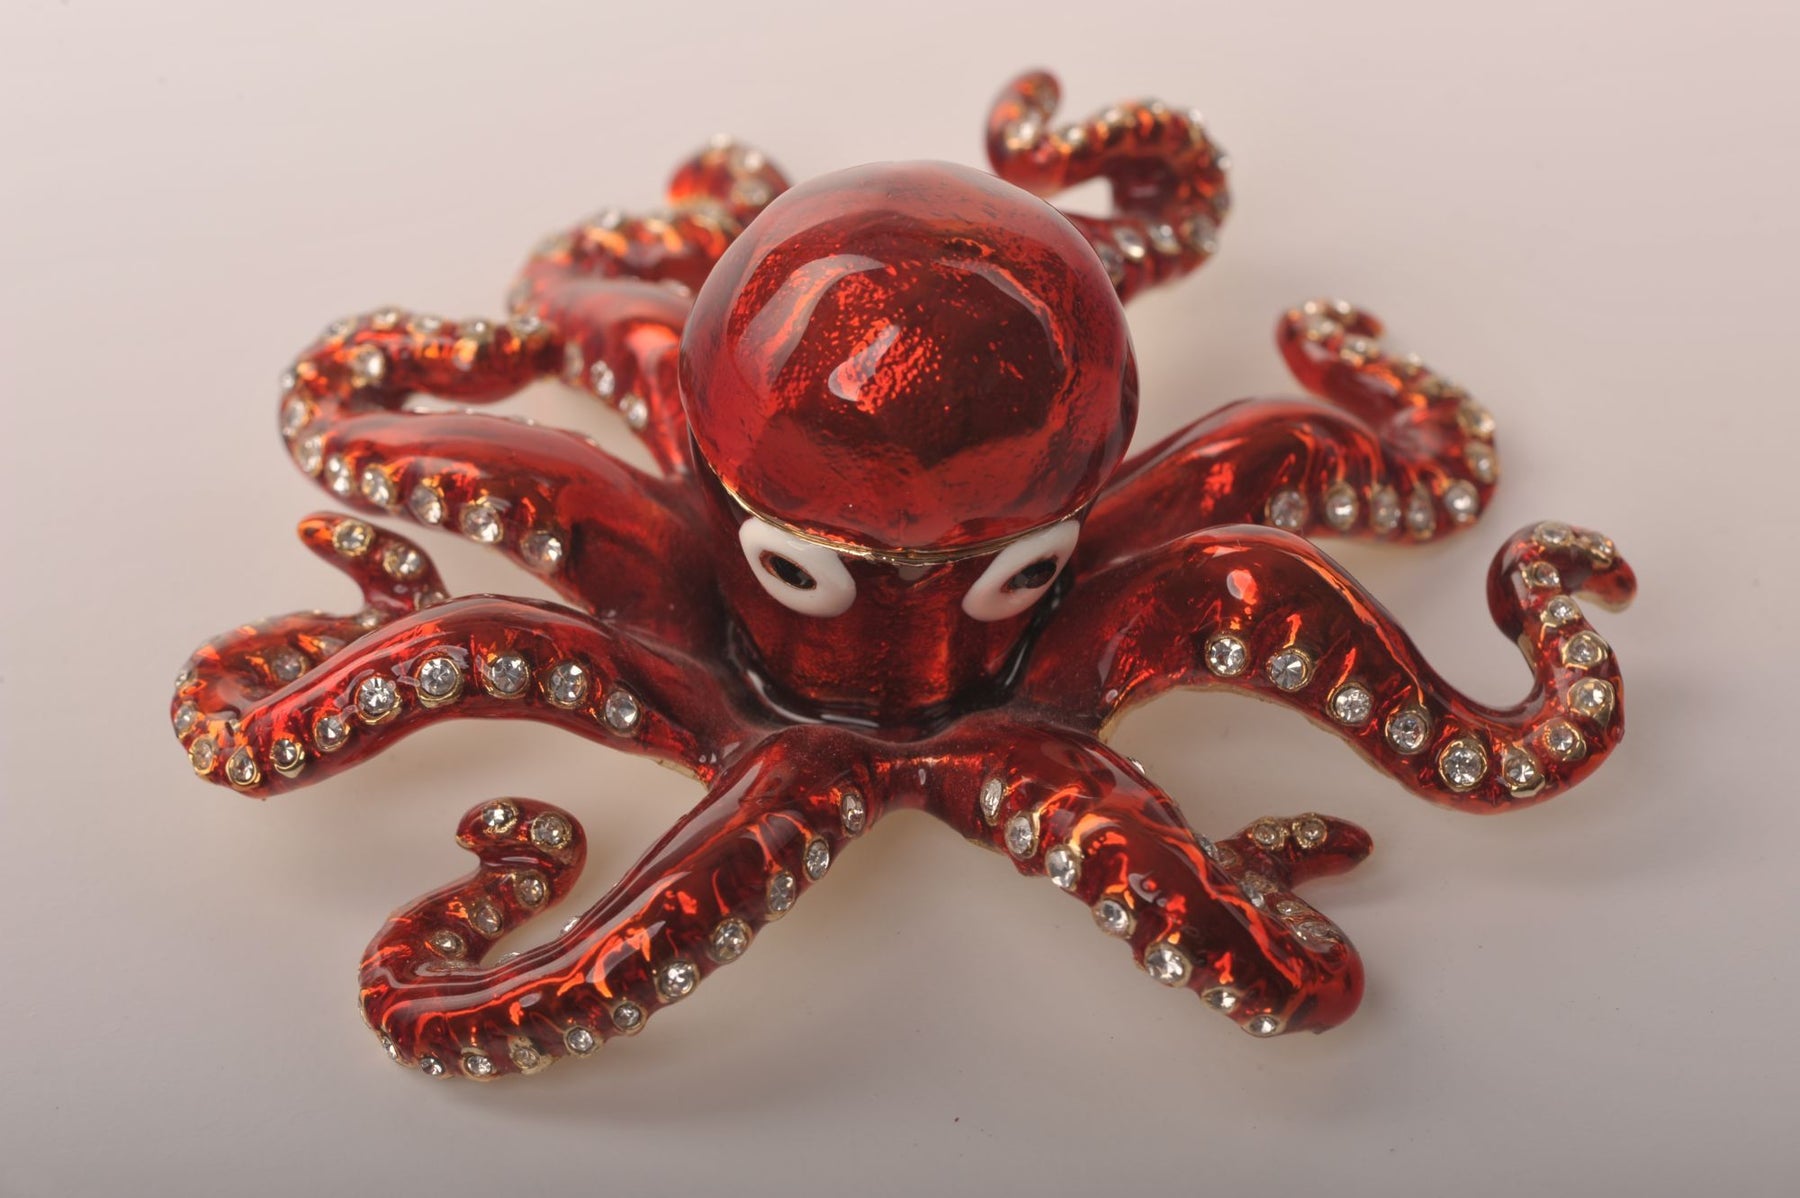 Keren Kopal Red Octopus  47.00